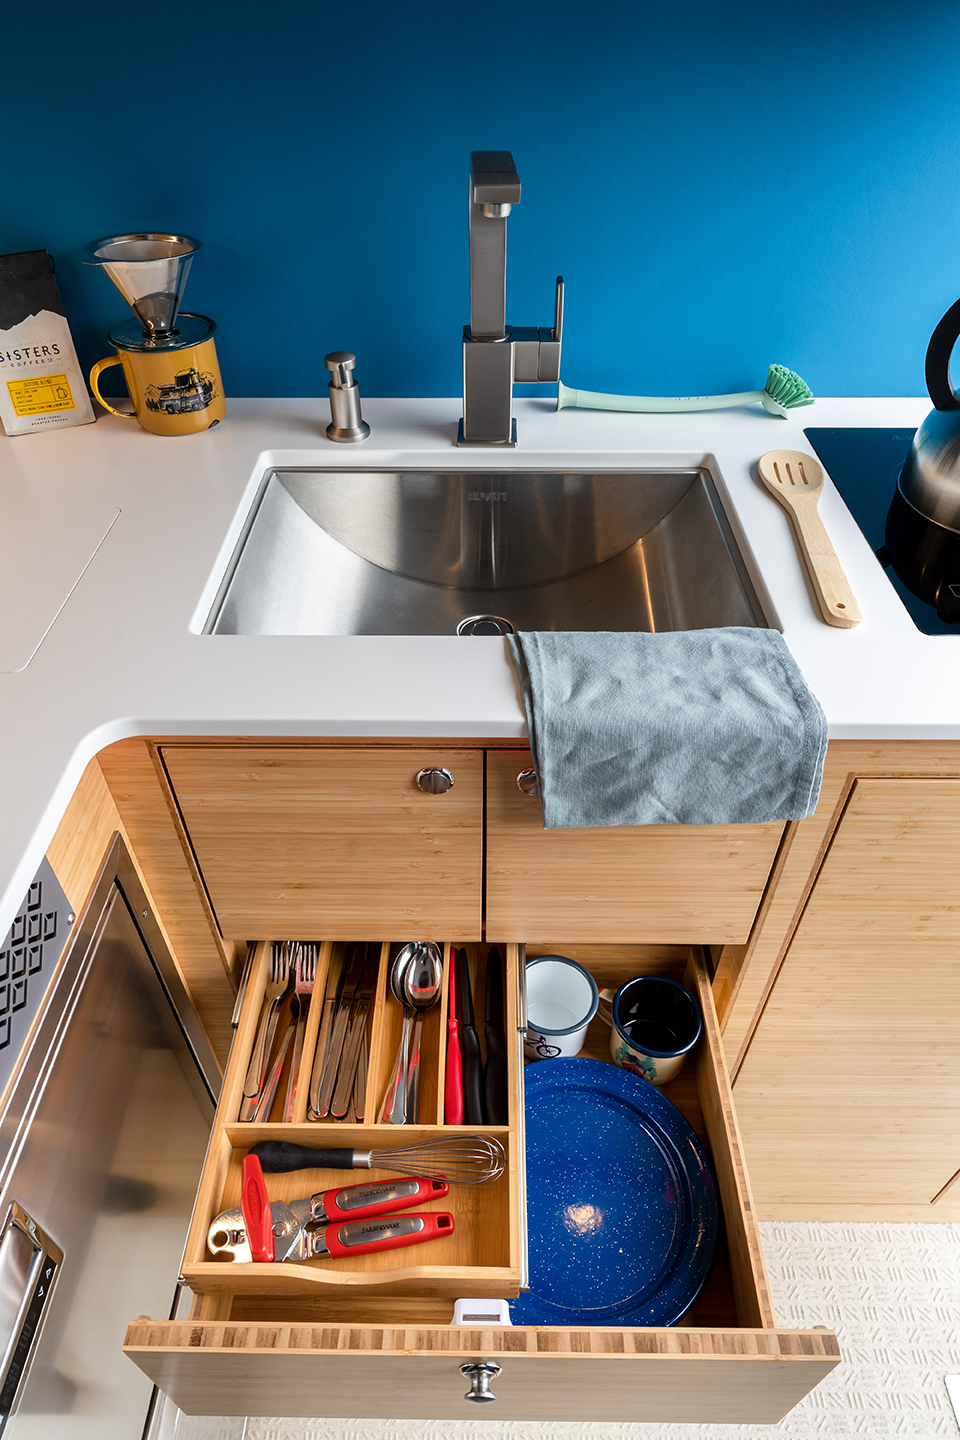 Stainless steel sink, Corian countertop, storage drawers